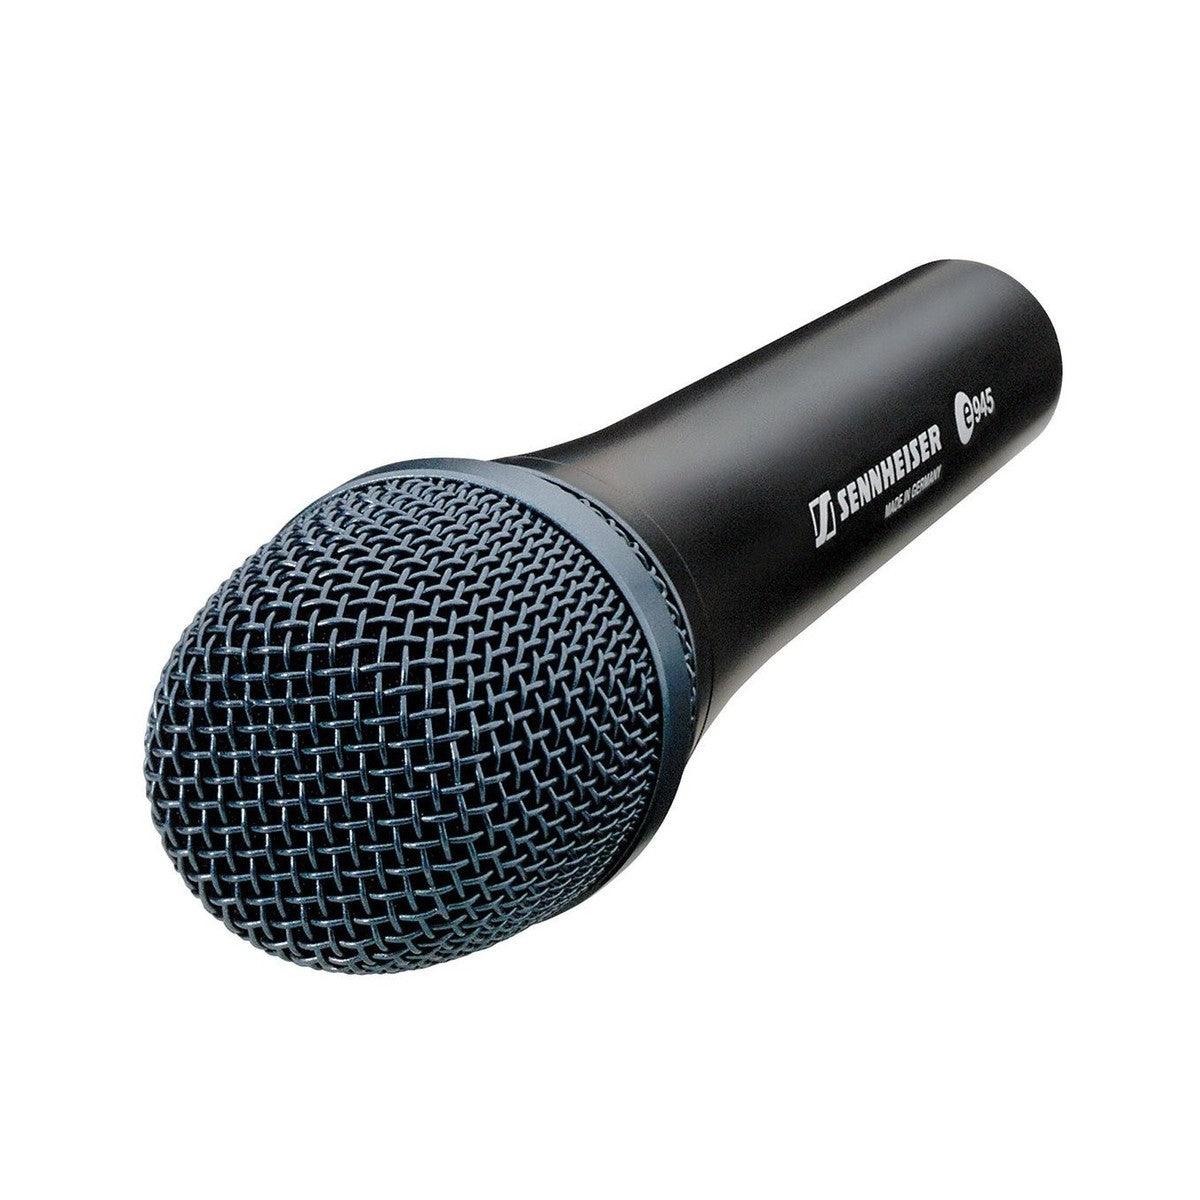 Sennheiser e945 Dynamic Vocal Microphone - DY Pro Audio